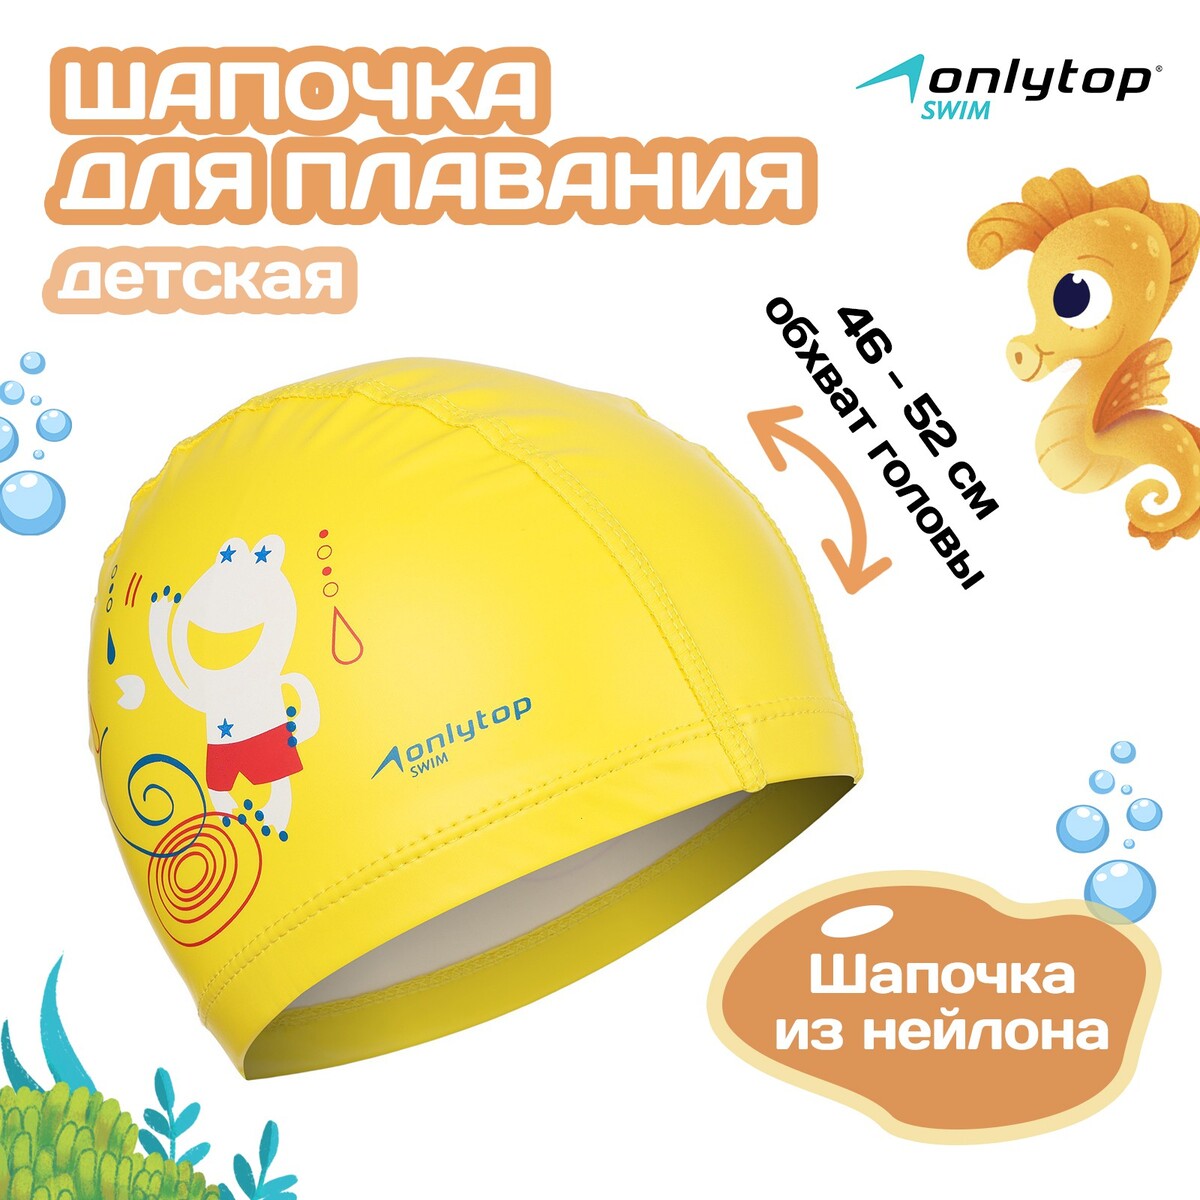 Шапочка для плавания детская onlytop, нейлон, обхват 46-52 см шапочка для плавания пу одно ная 3d желтая sportex b31517